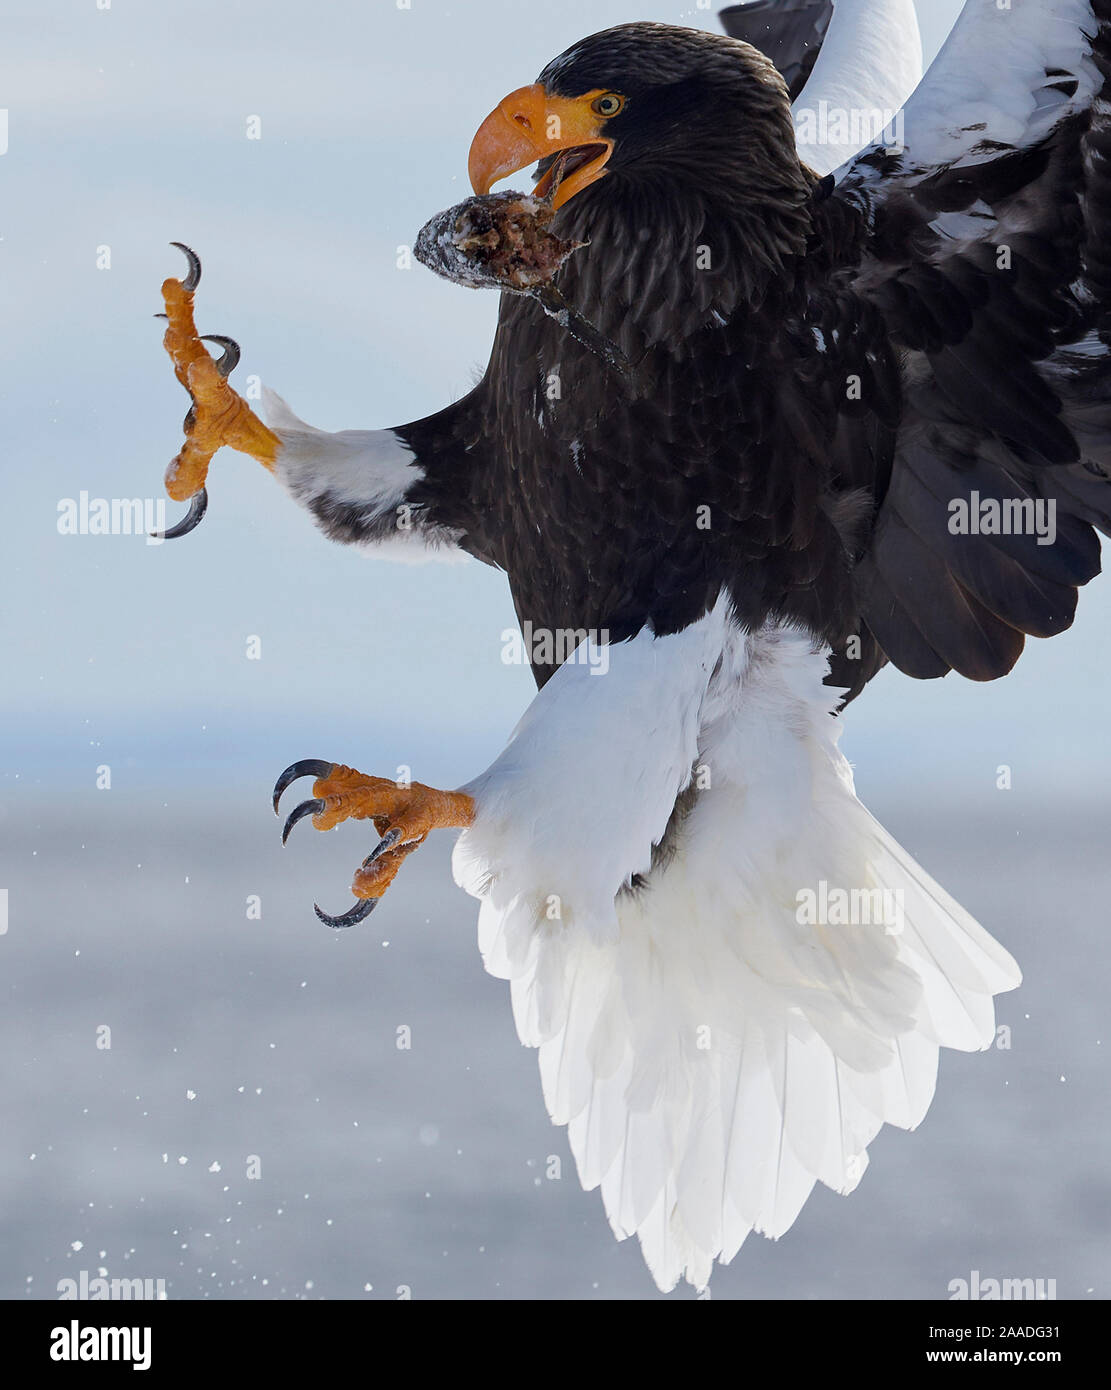 Steller's Sea Eagle (Haliaeetus pelagicus)  with prey in beak in mid-air, Hokkaido, Japan, February. Stock Photo